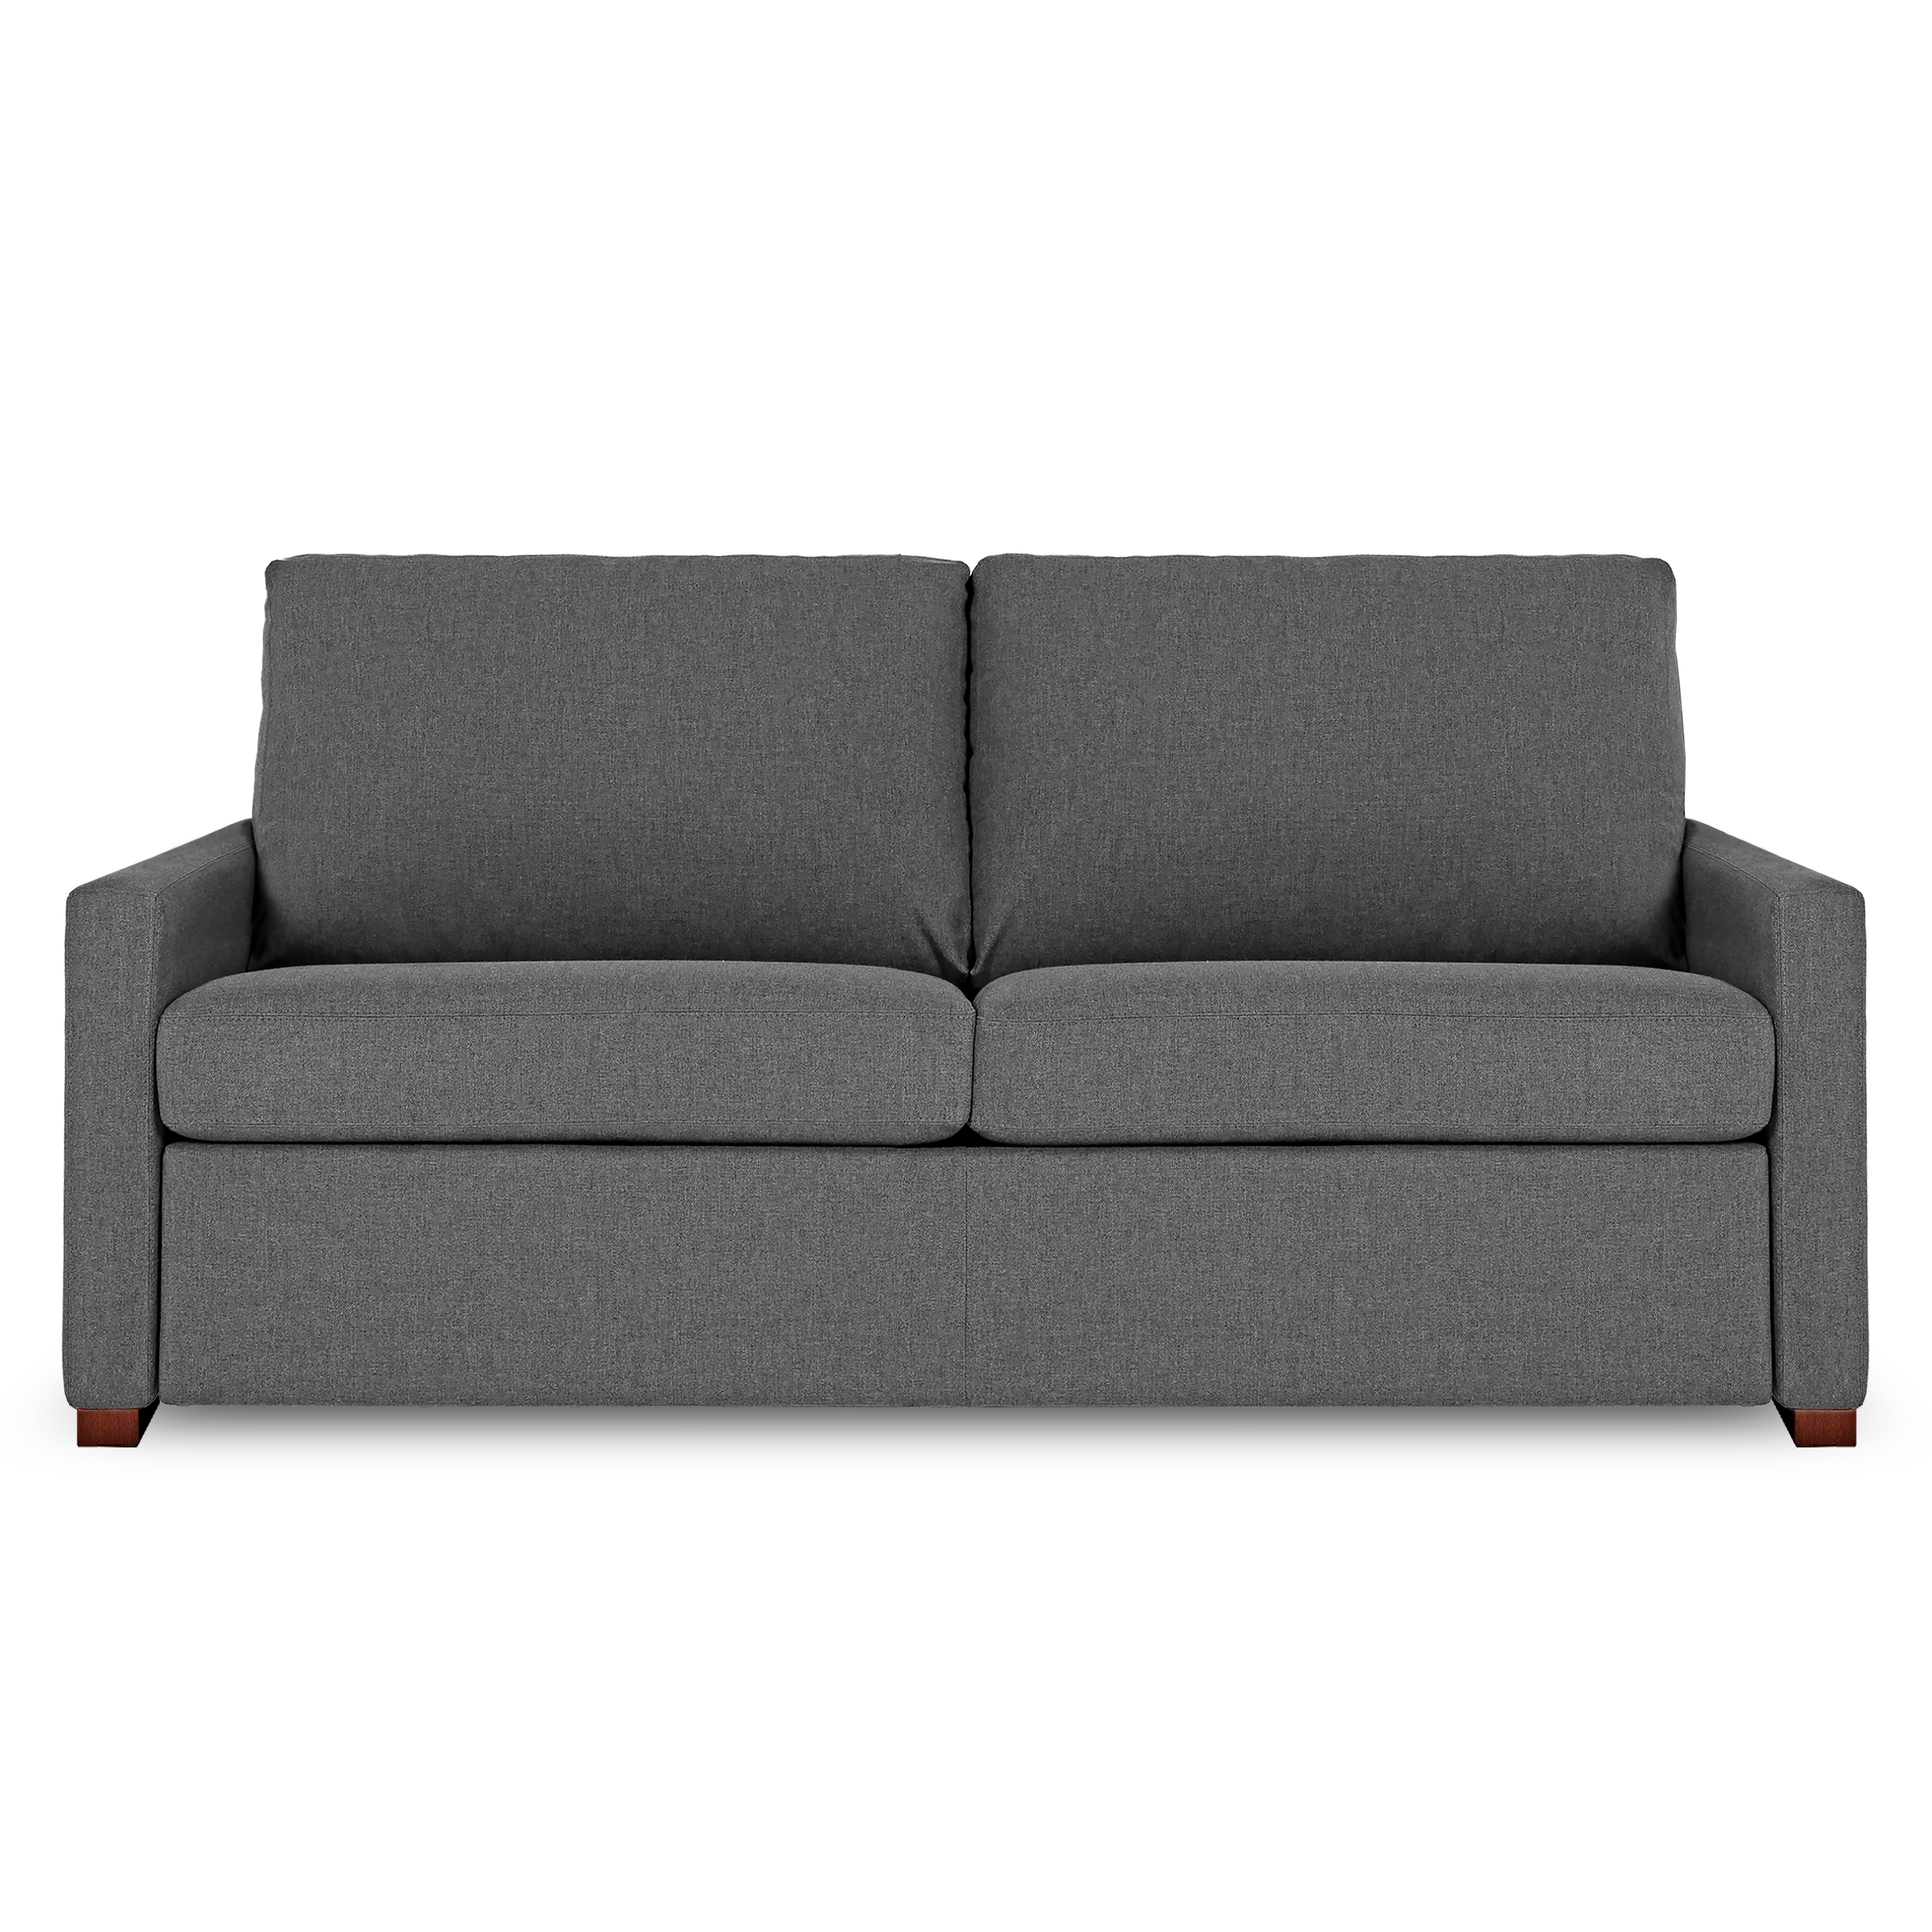 American Leather Comfort Sleeper - Pearson - Best Sofa Sleeper